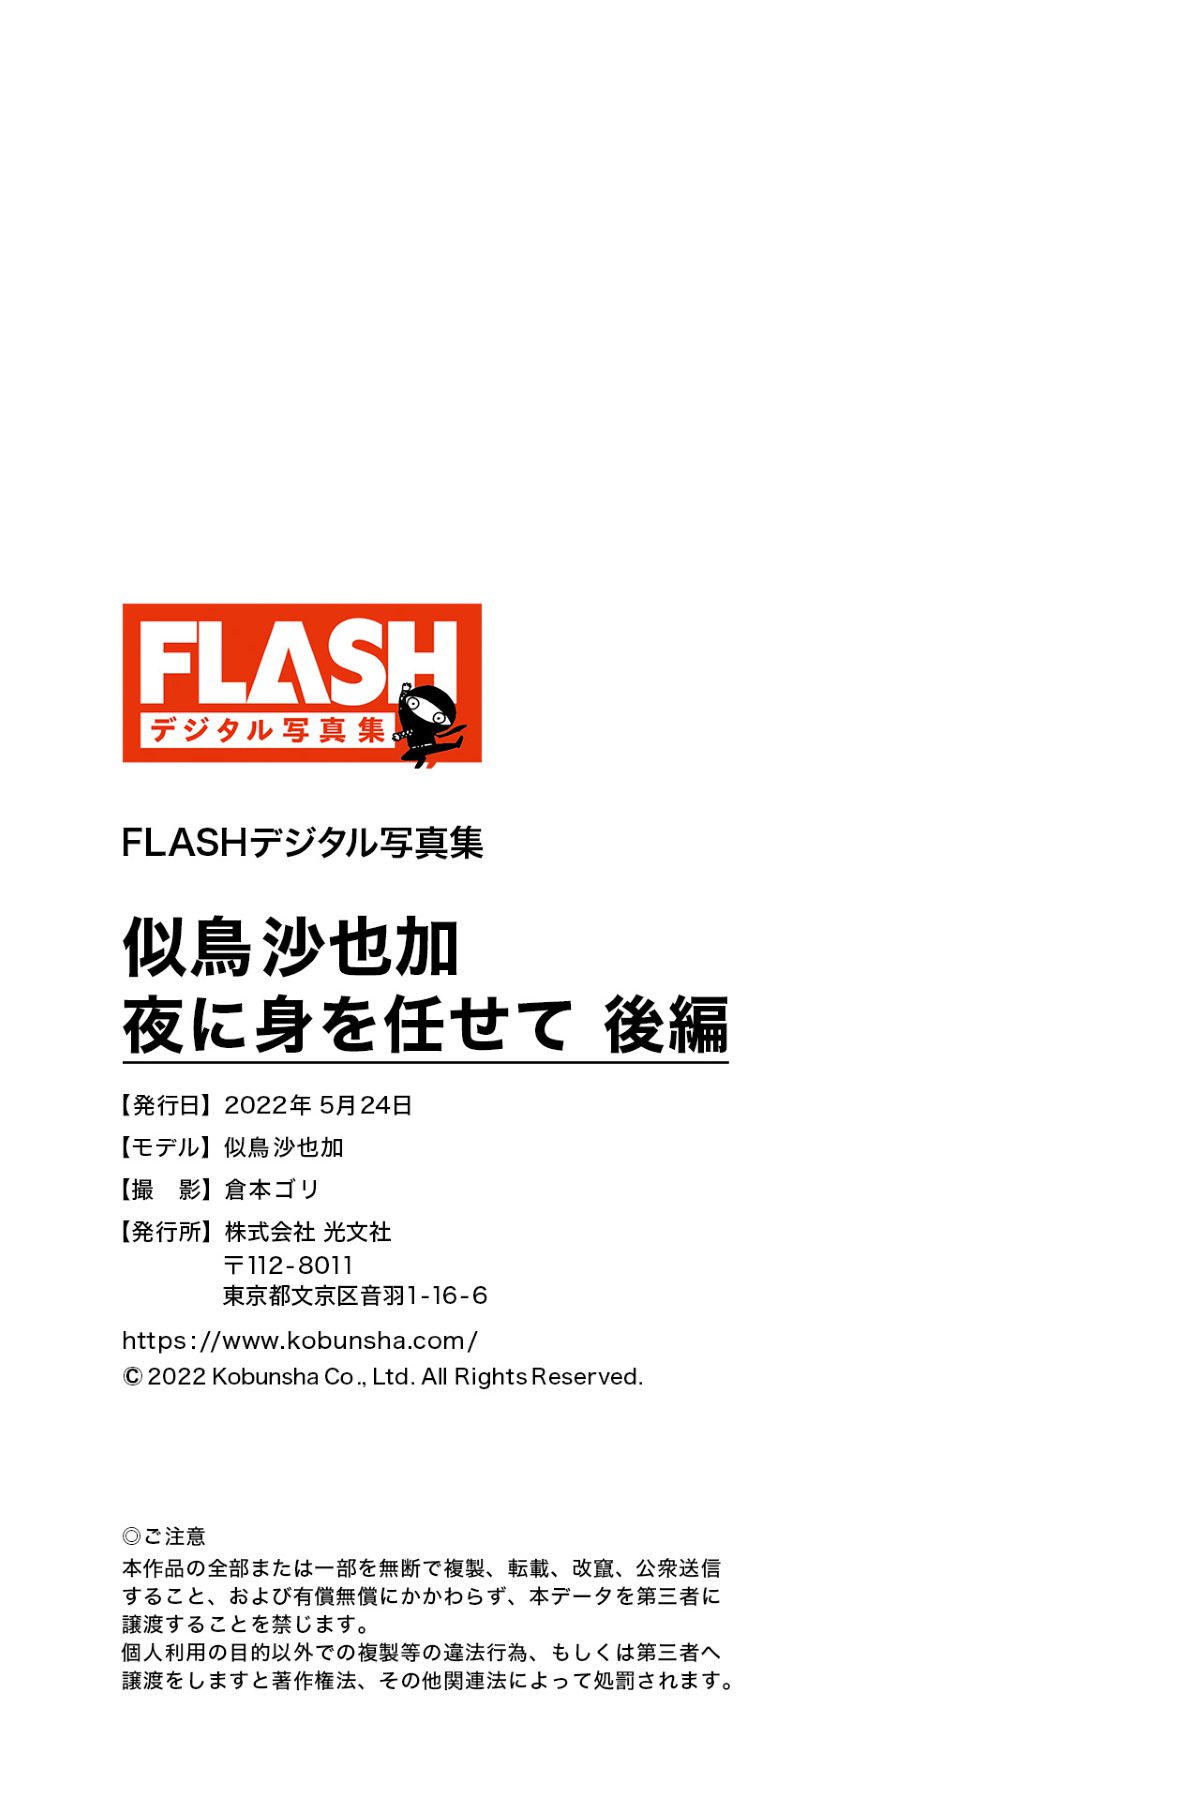 FLASH Photobook 2022 05 24 Sayaka Nitori 似鳥沙也加 Leave yourself at night Part 2 夜に身を任せて 後編 B 0000120 2848033600.jpg